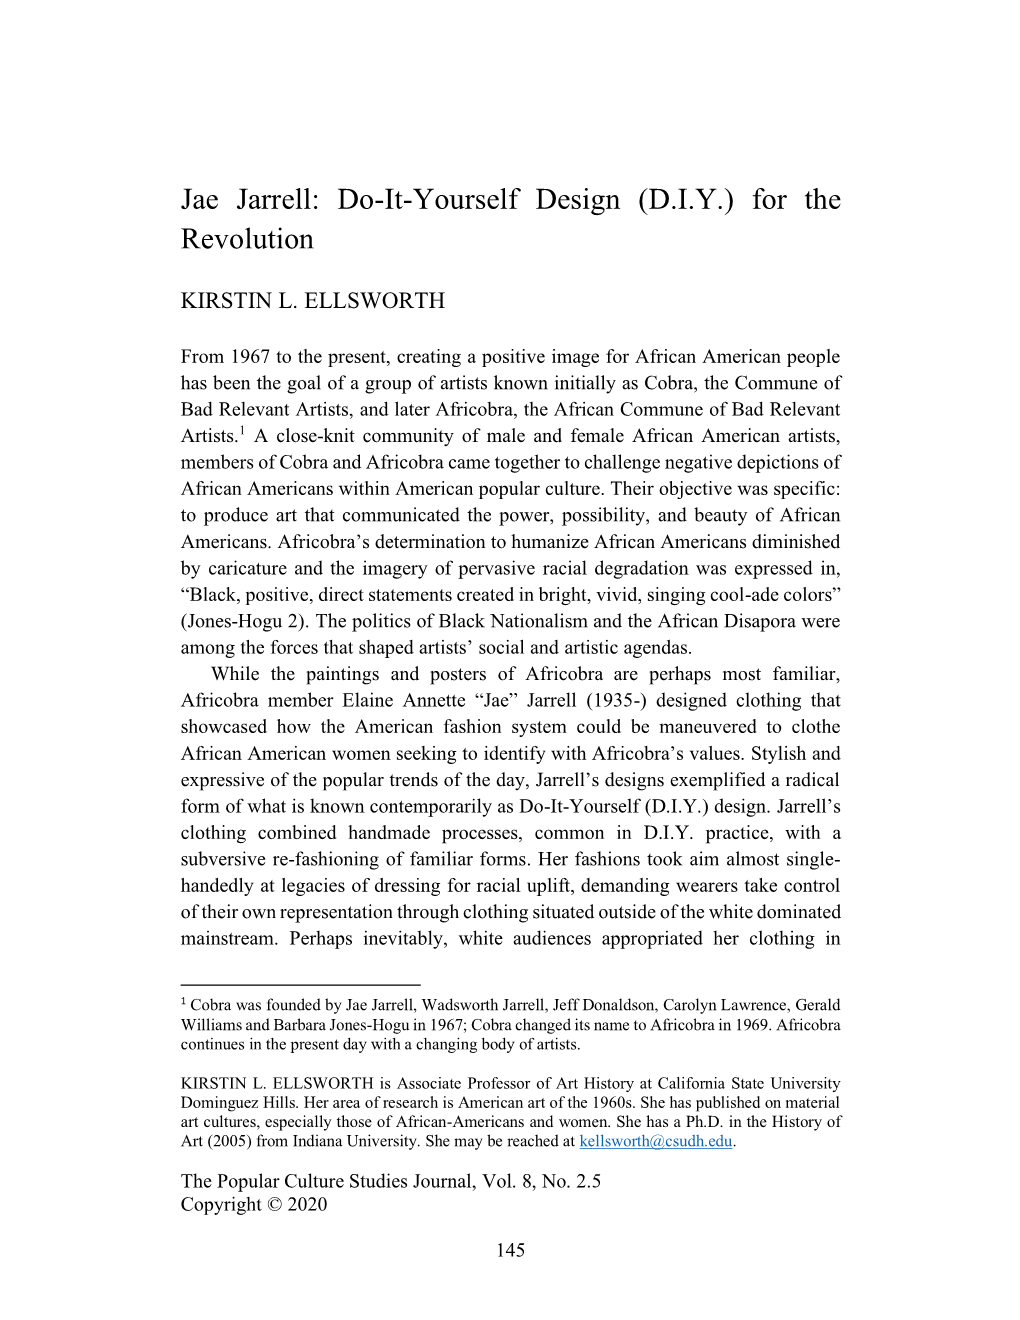 Jae Jarrell: Do-It-Yourself (D.I.Y.) Design for the Revolution